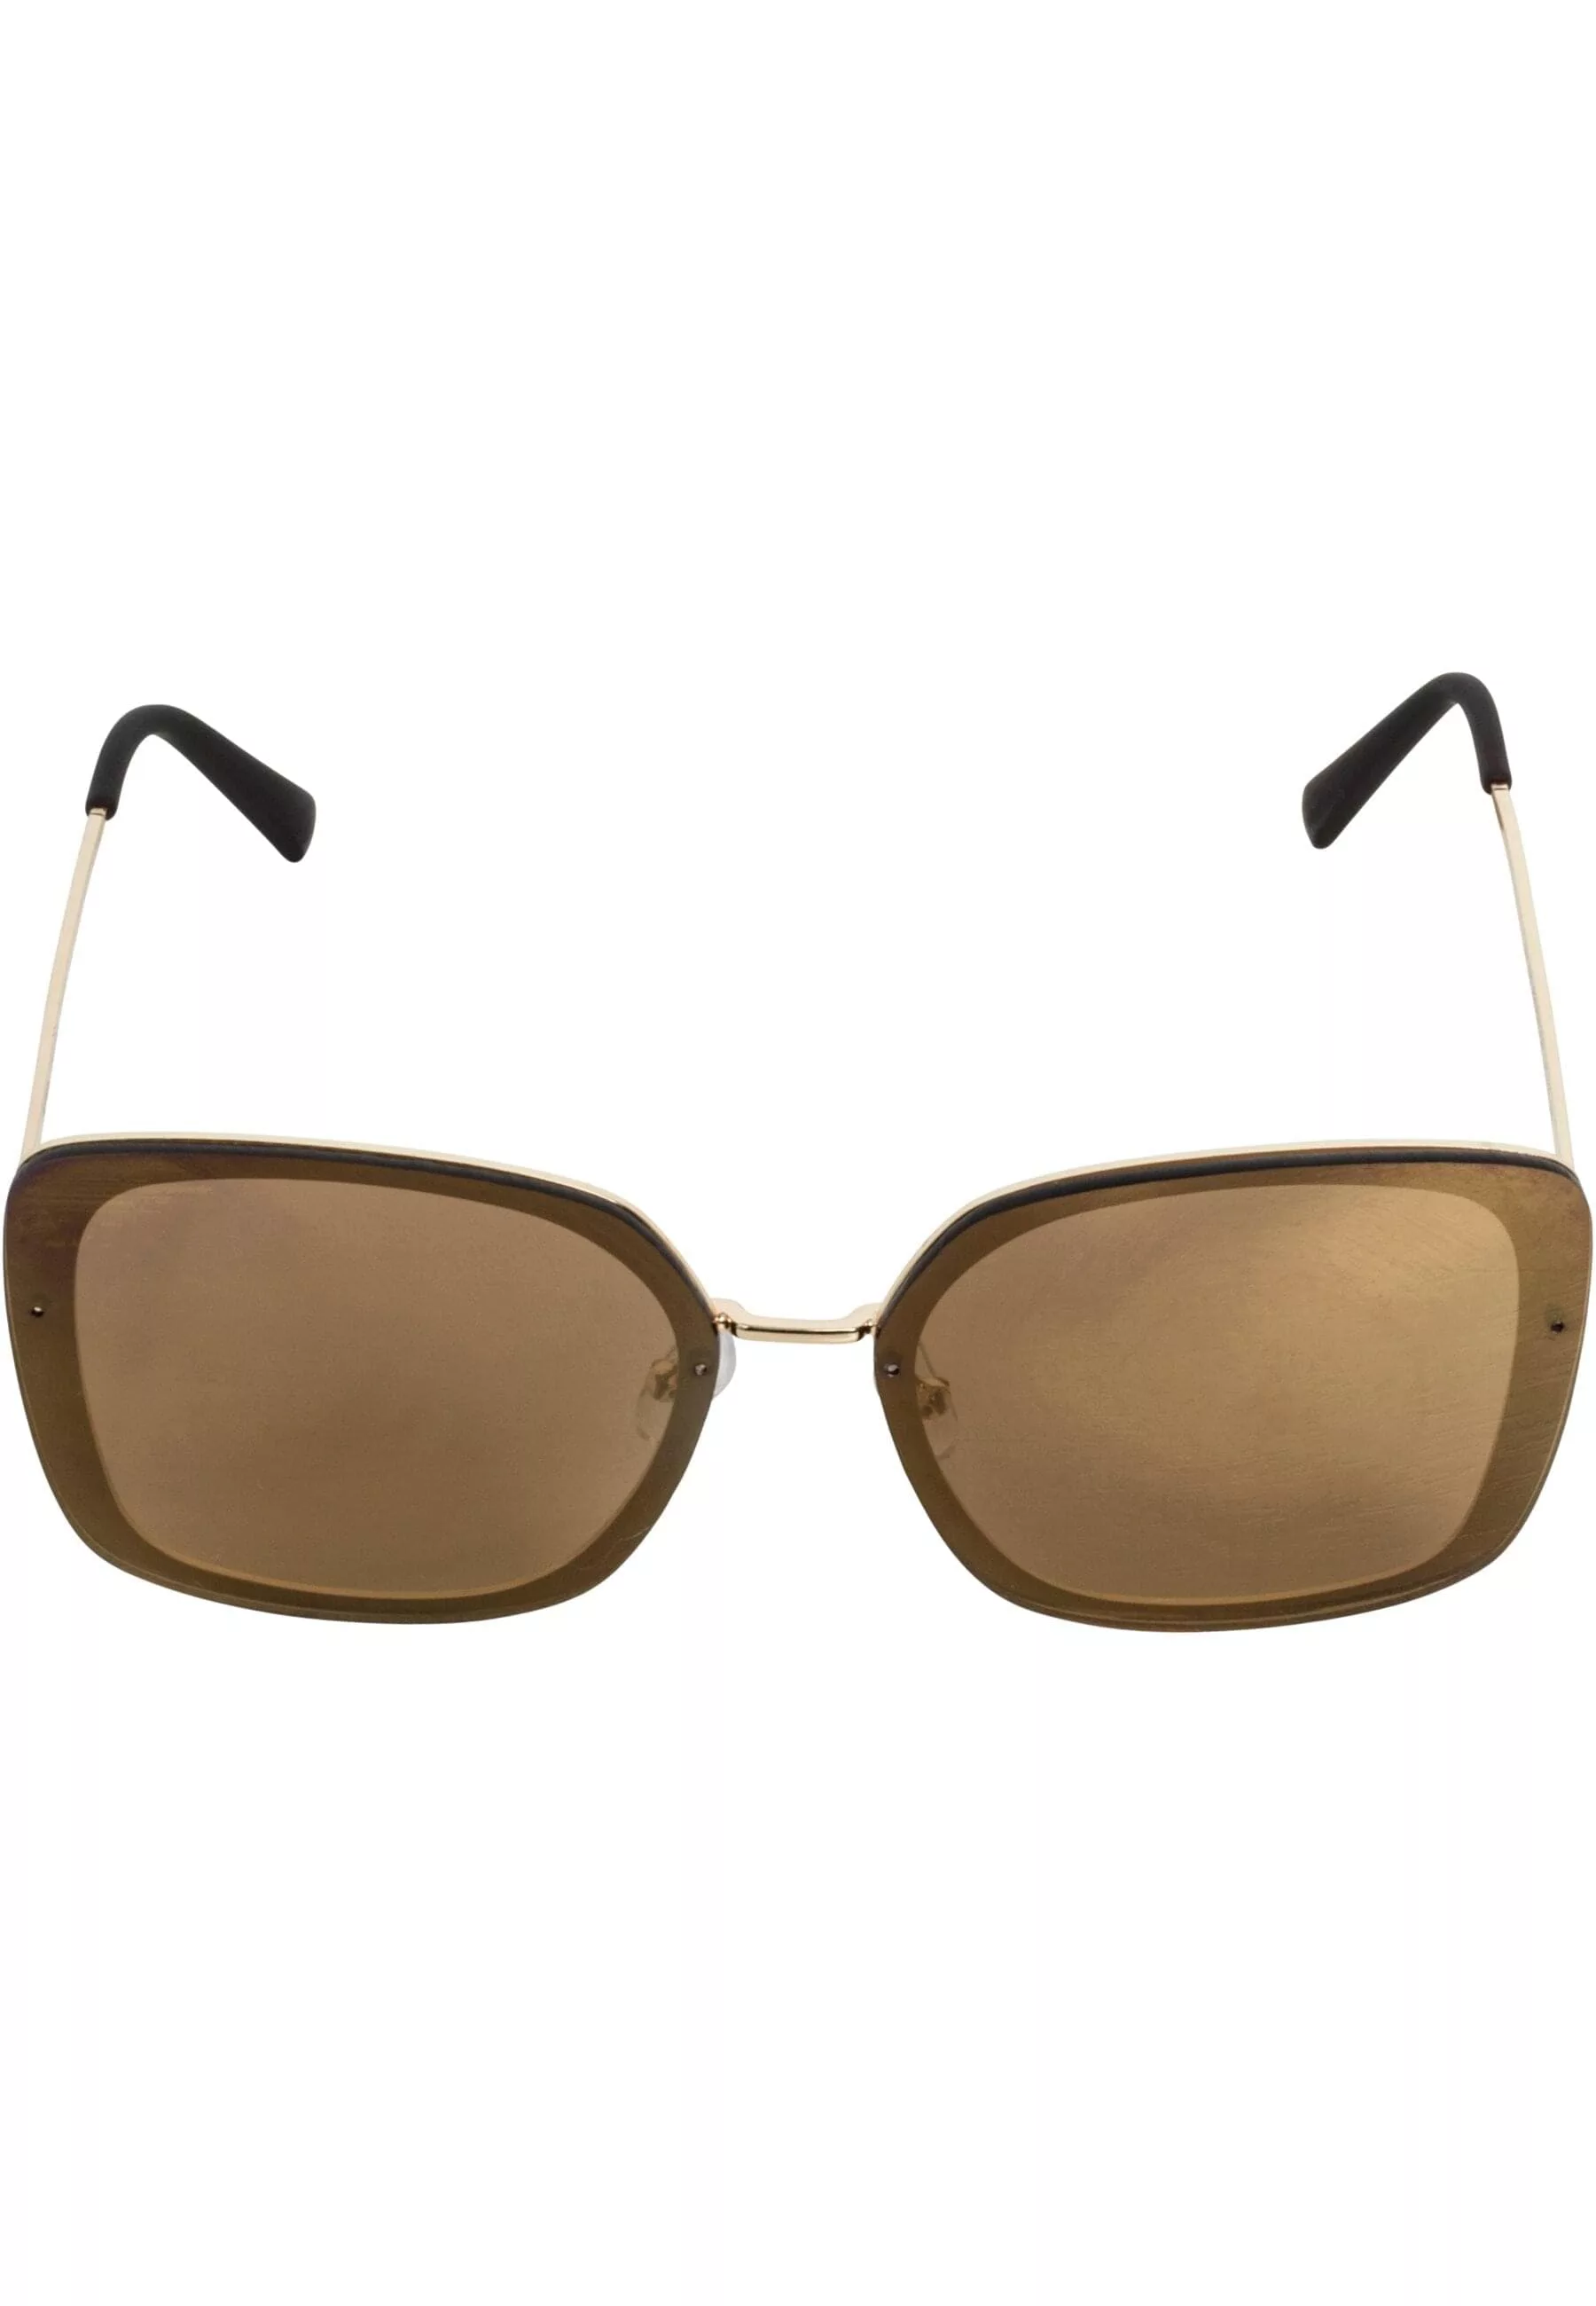 MSTRDS Sonnenbrille "MSTRDS Unisex Sunglasses December" günstig online kaufen